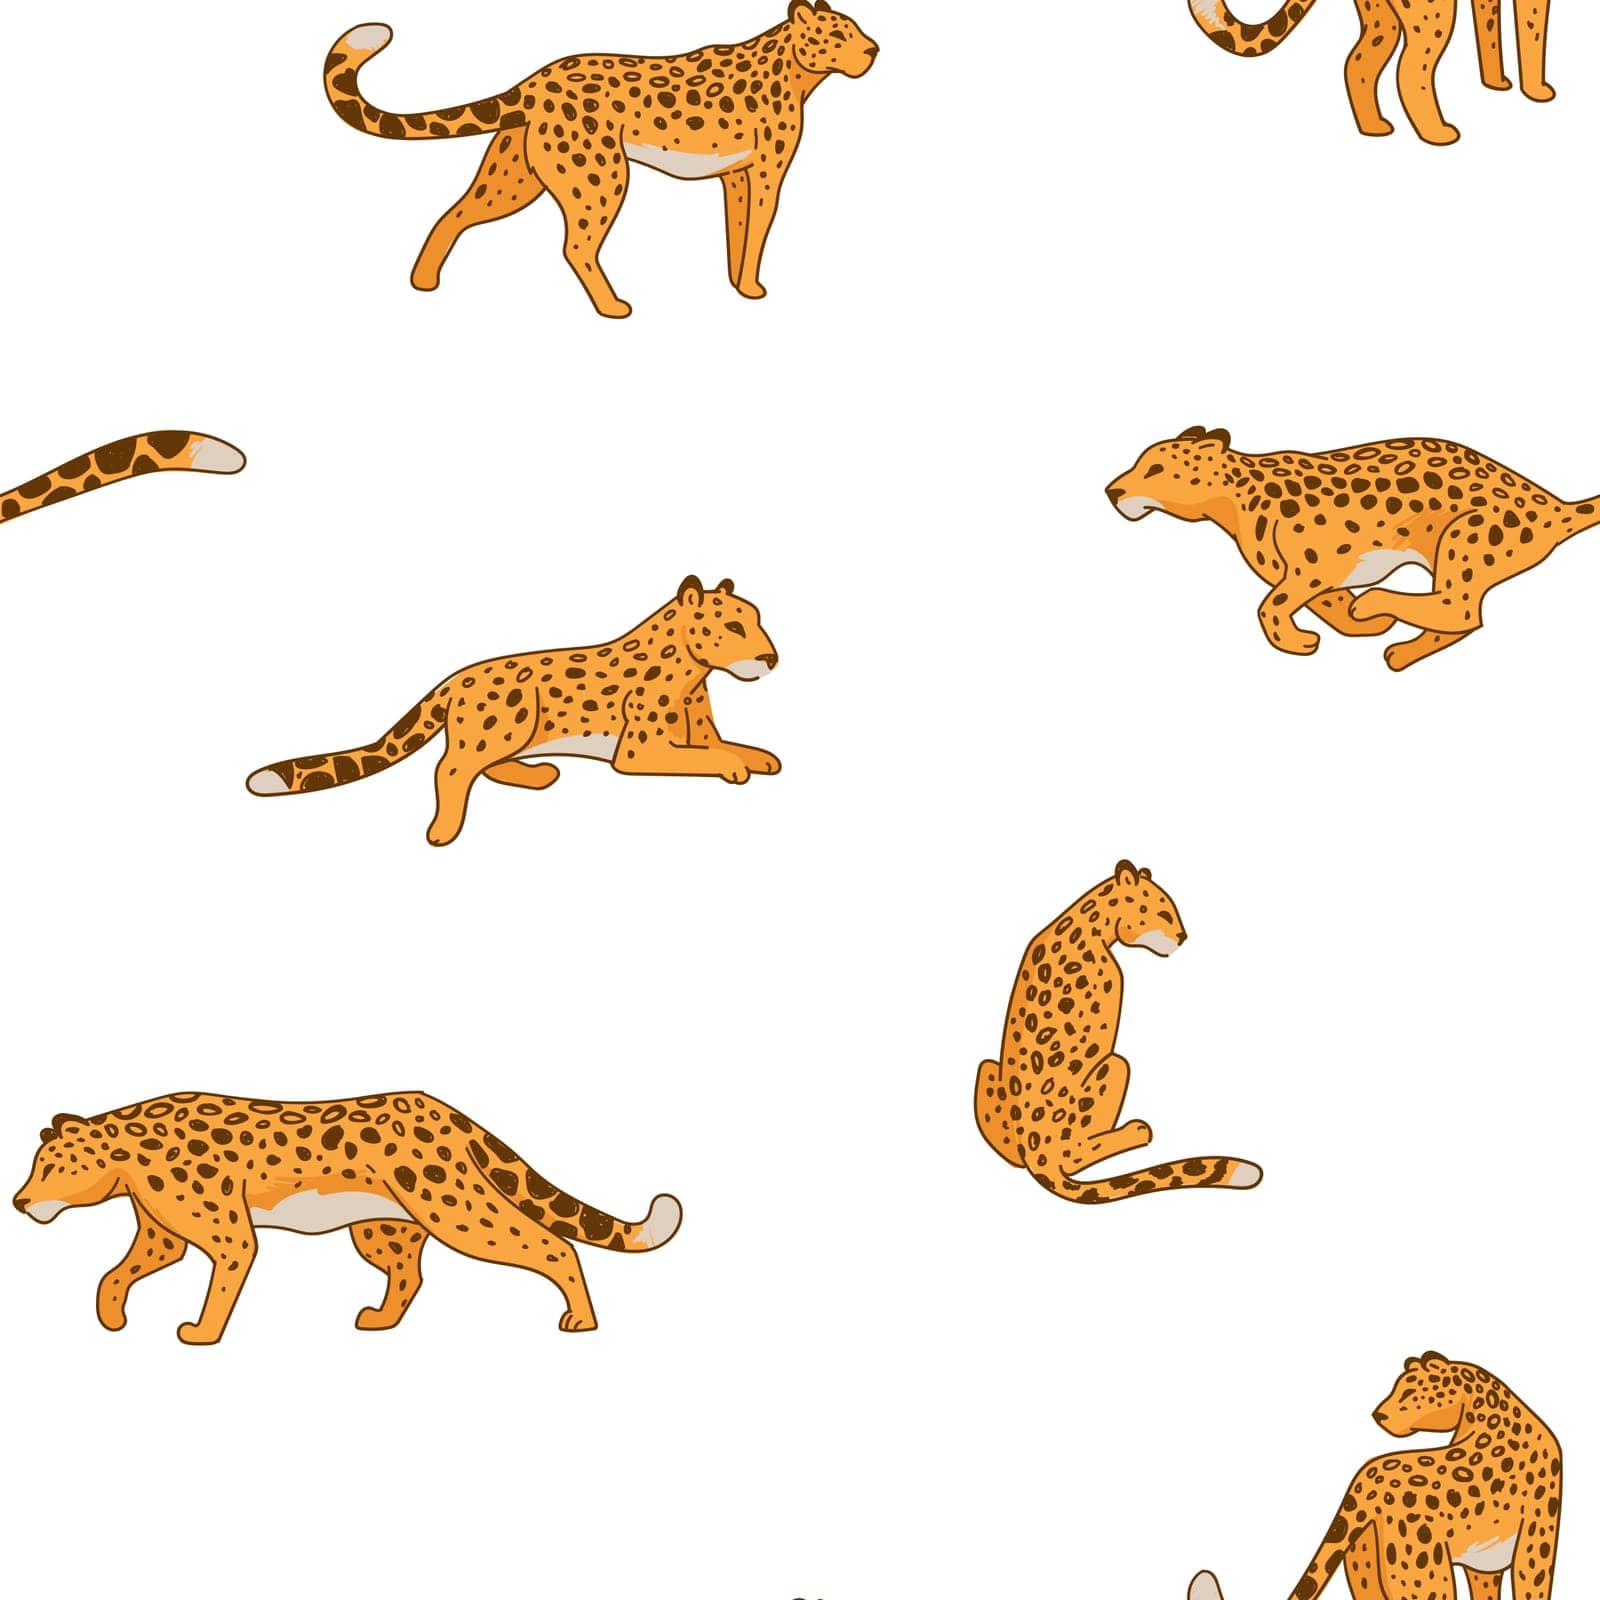 Cheetah animal in motion still seamless pattern by Sonulkaster